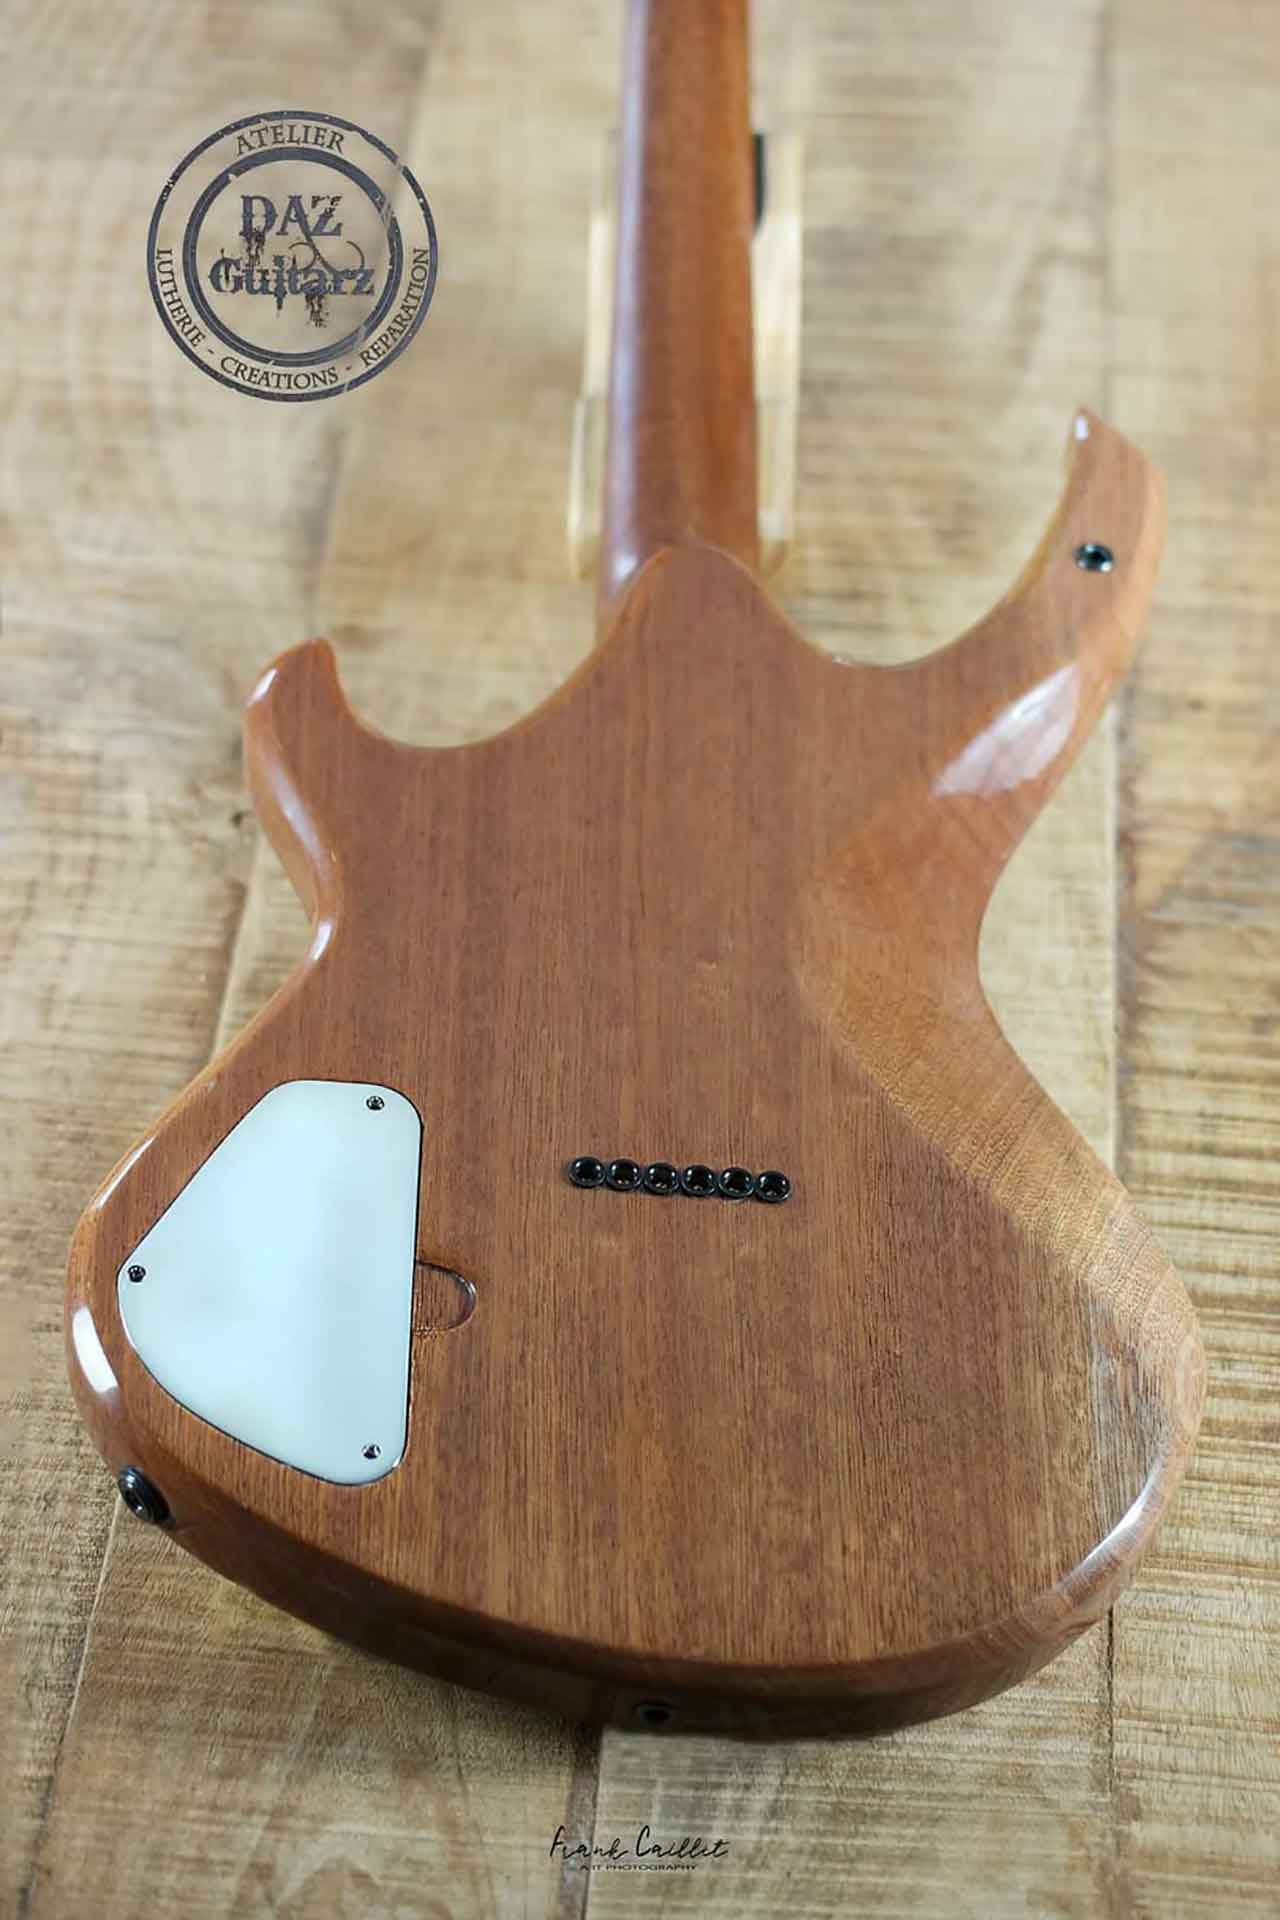 Daz Guitarz joined Luthiers.com